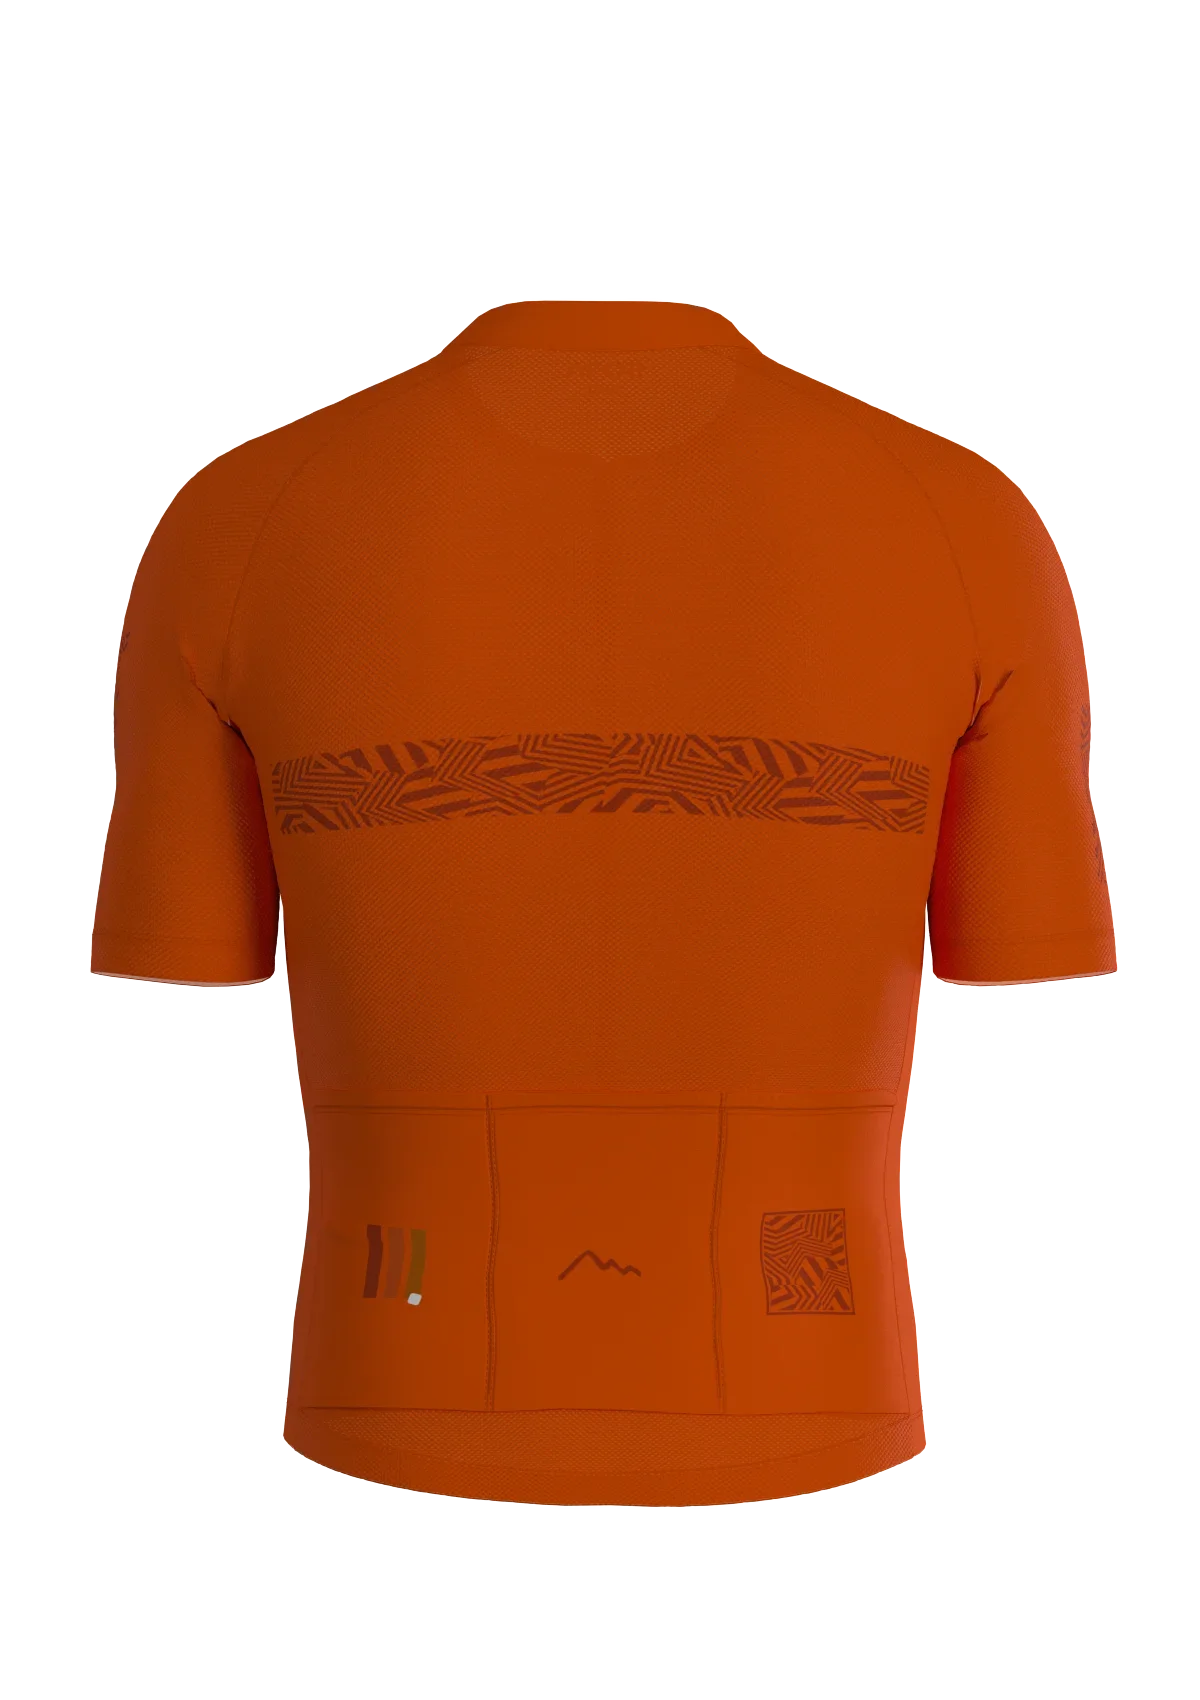 Classic Orange cycling jersey